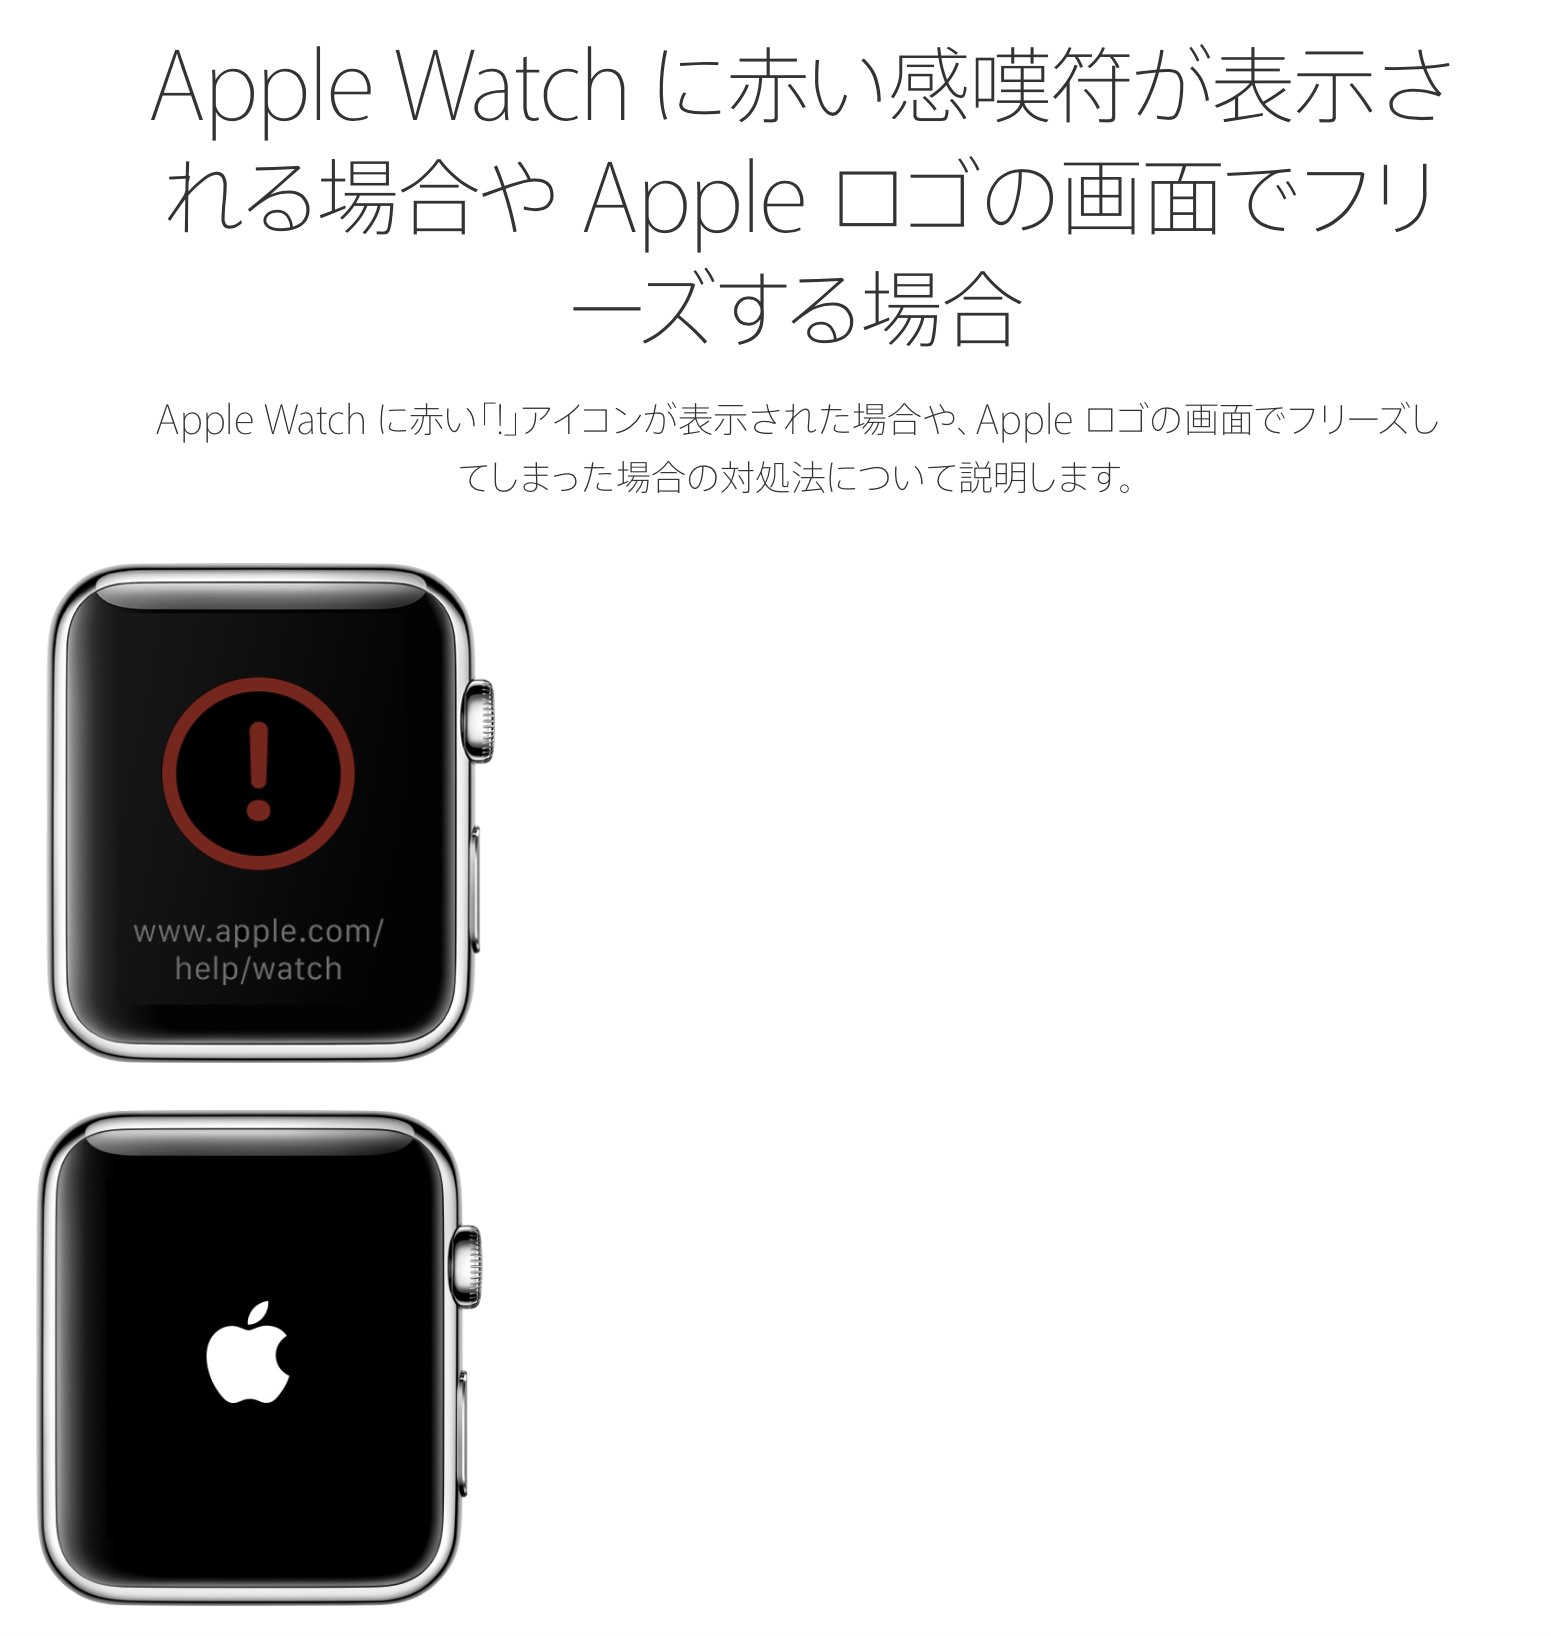 applewatch-support